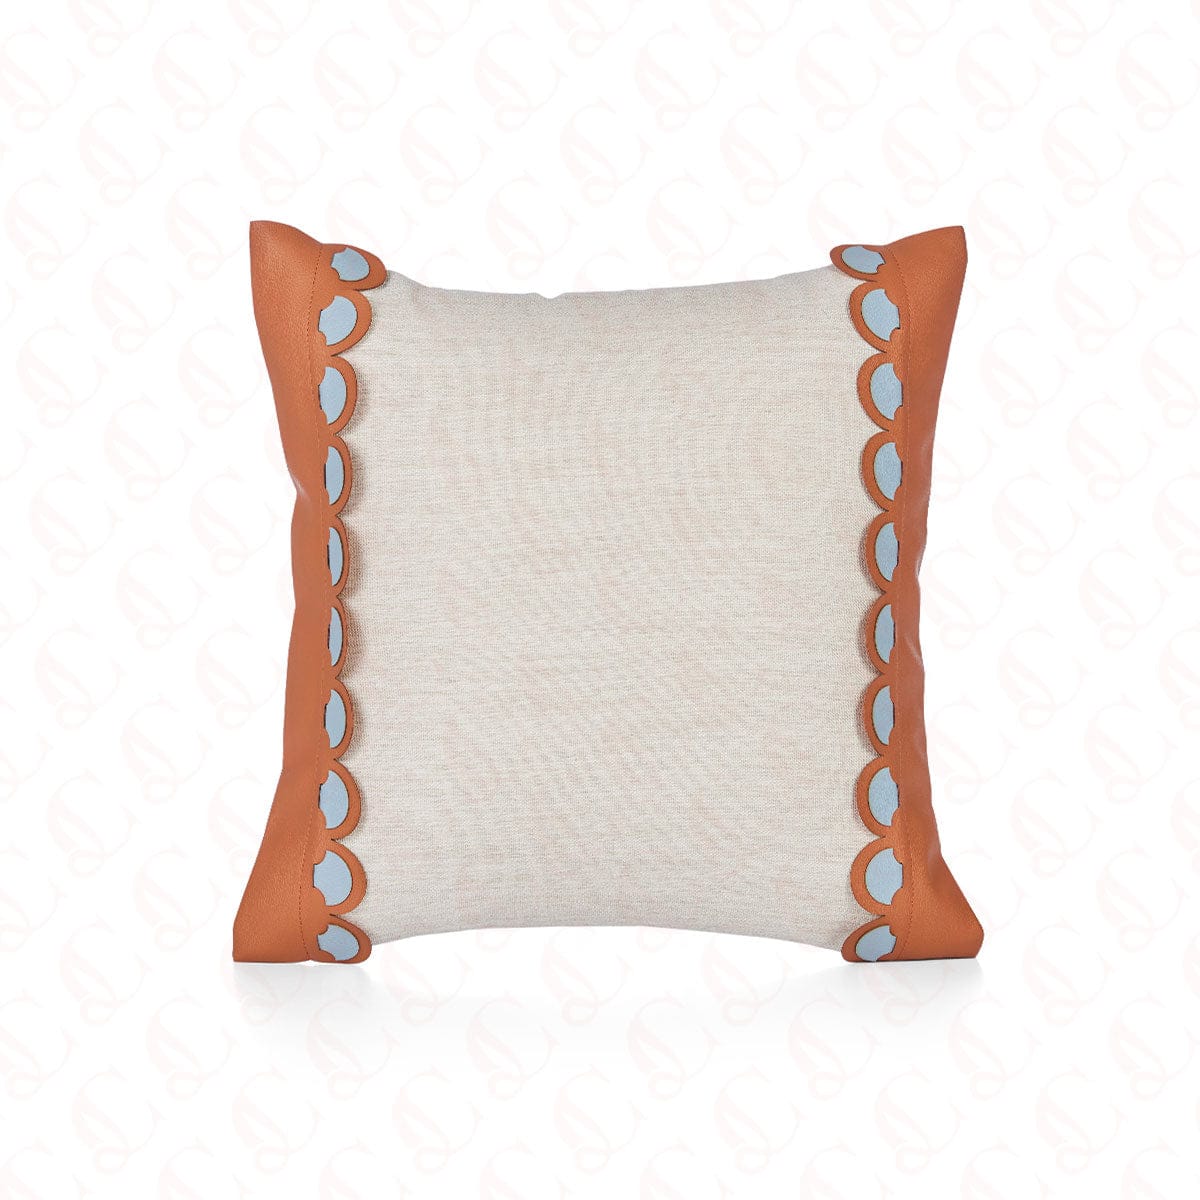 Designer Tangle Cushion Cover